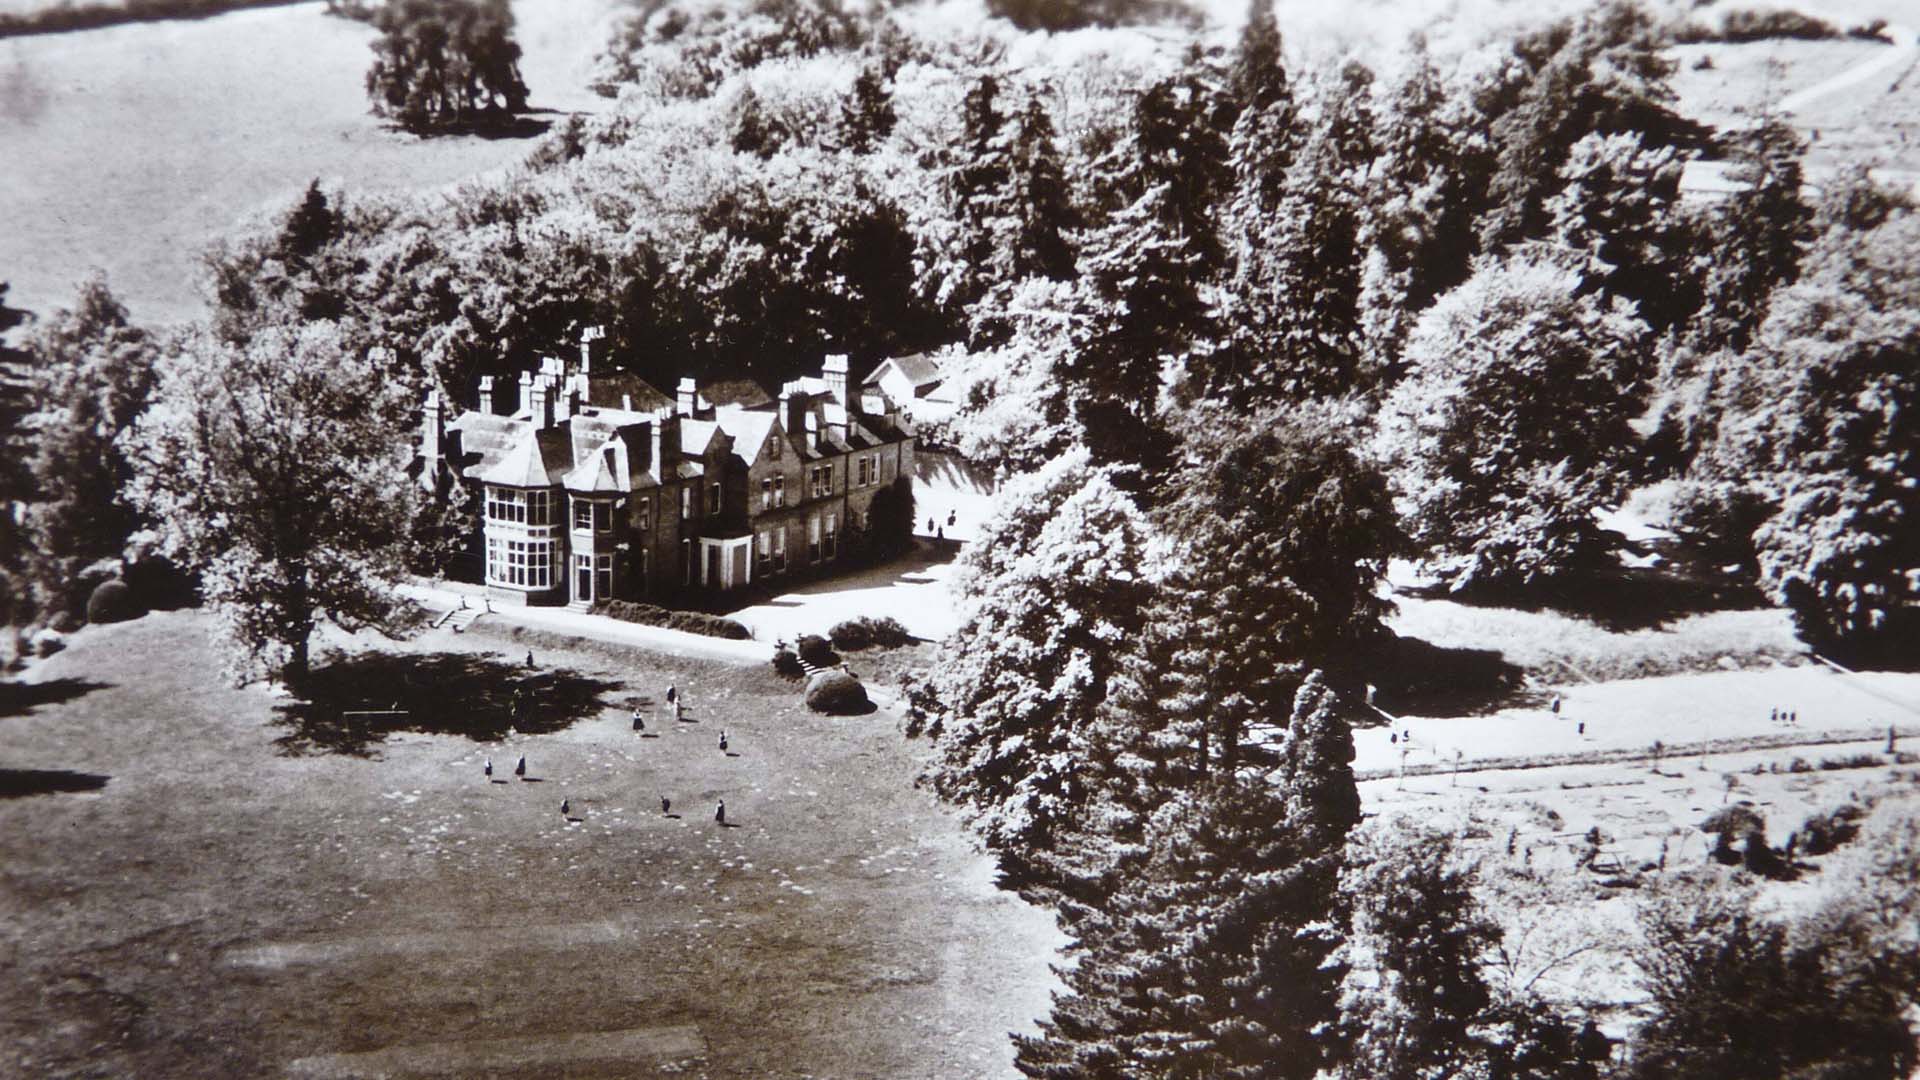 Culmington Manor